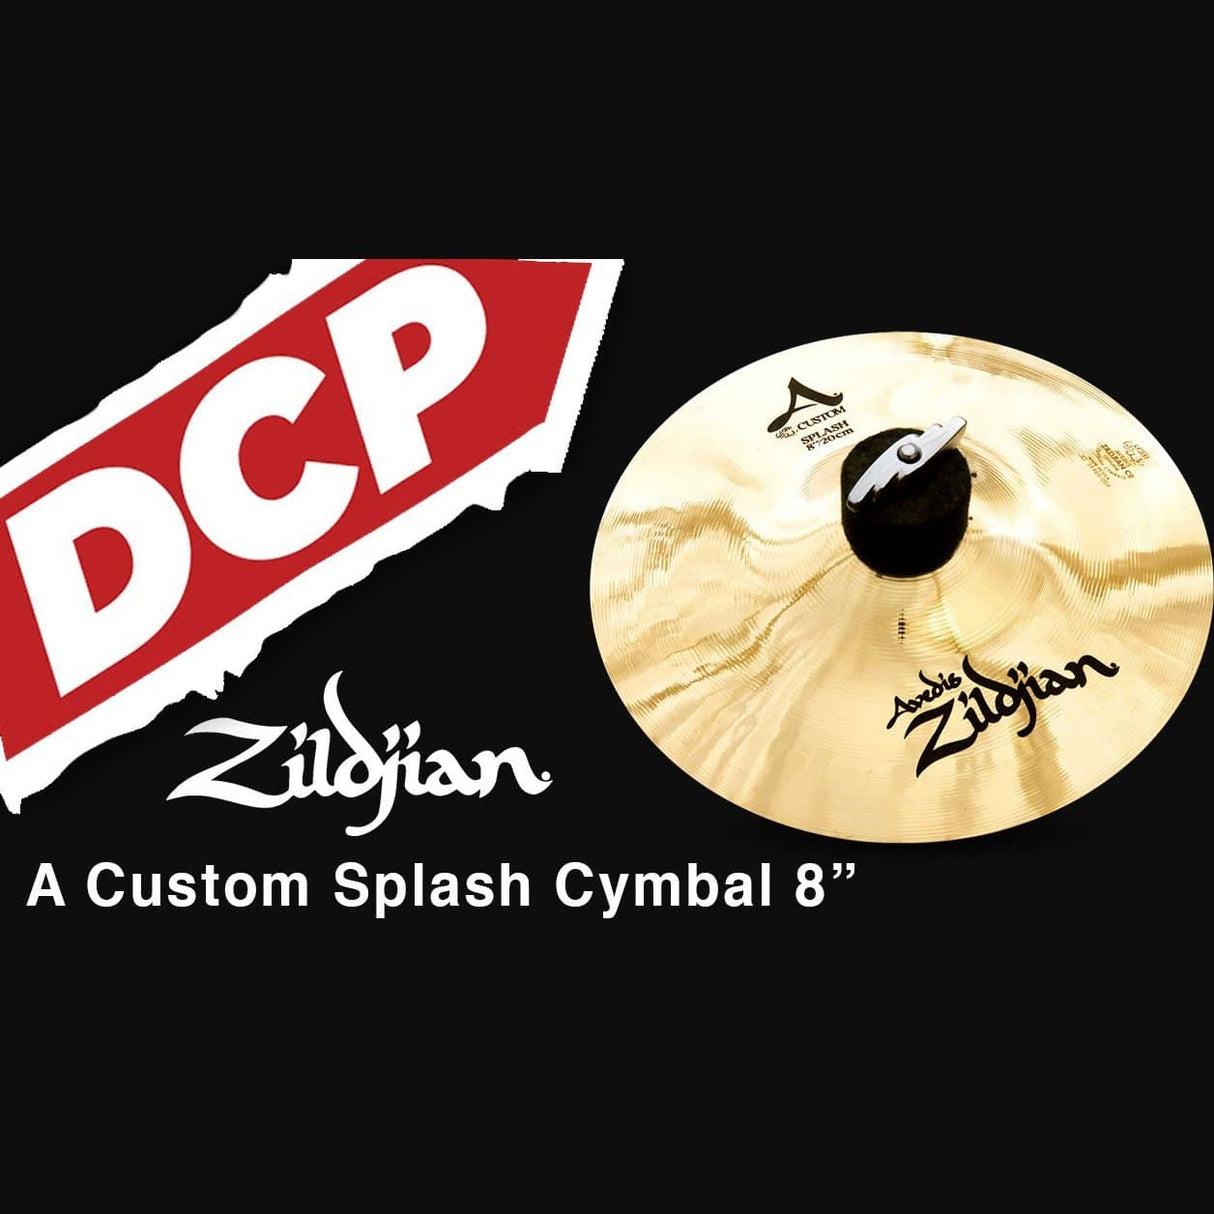 Zildjian A Custom Splash Cymbal 8"